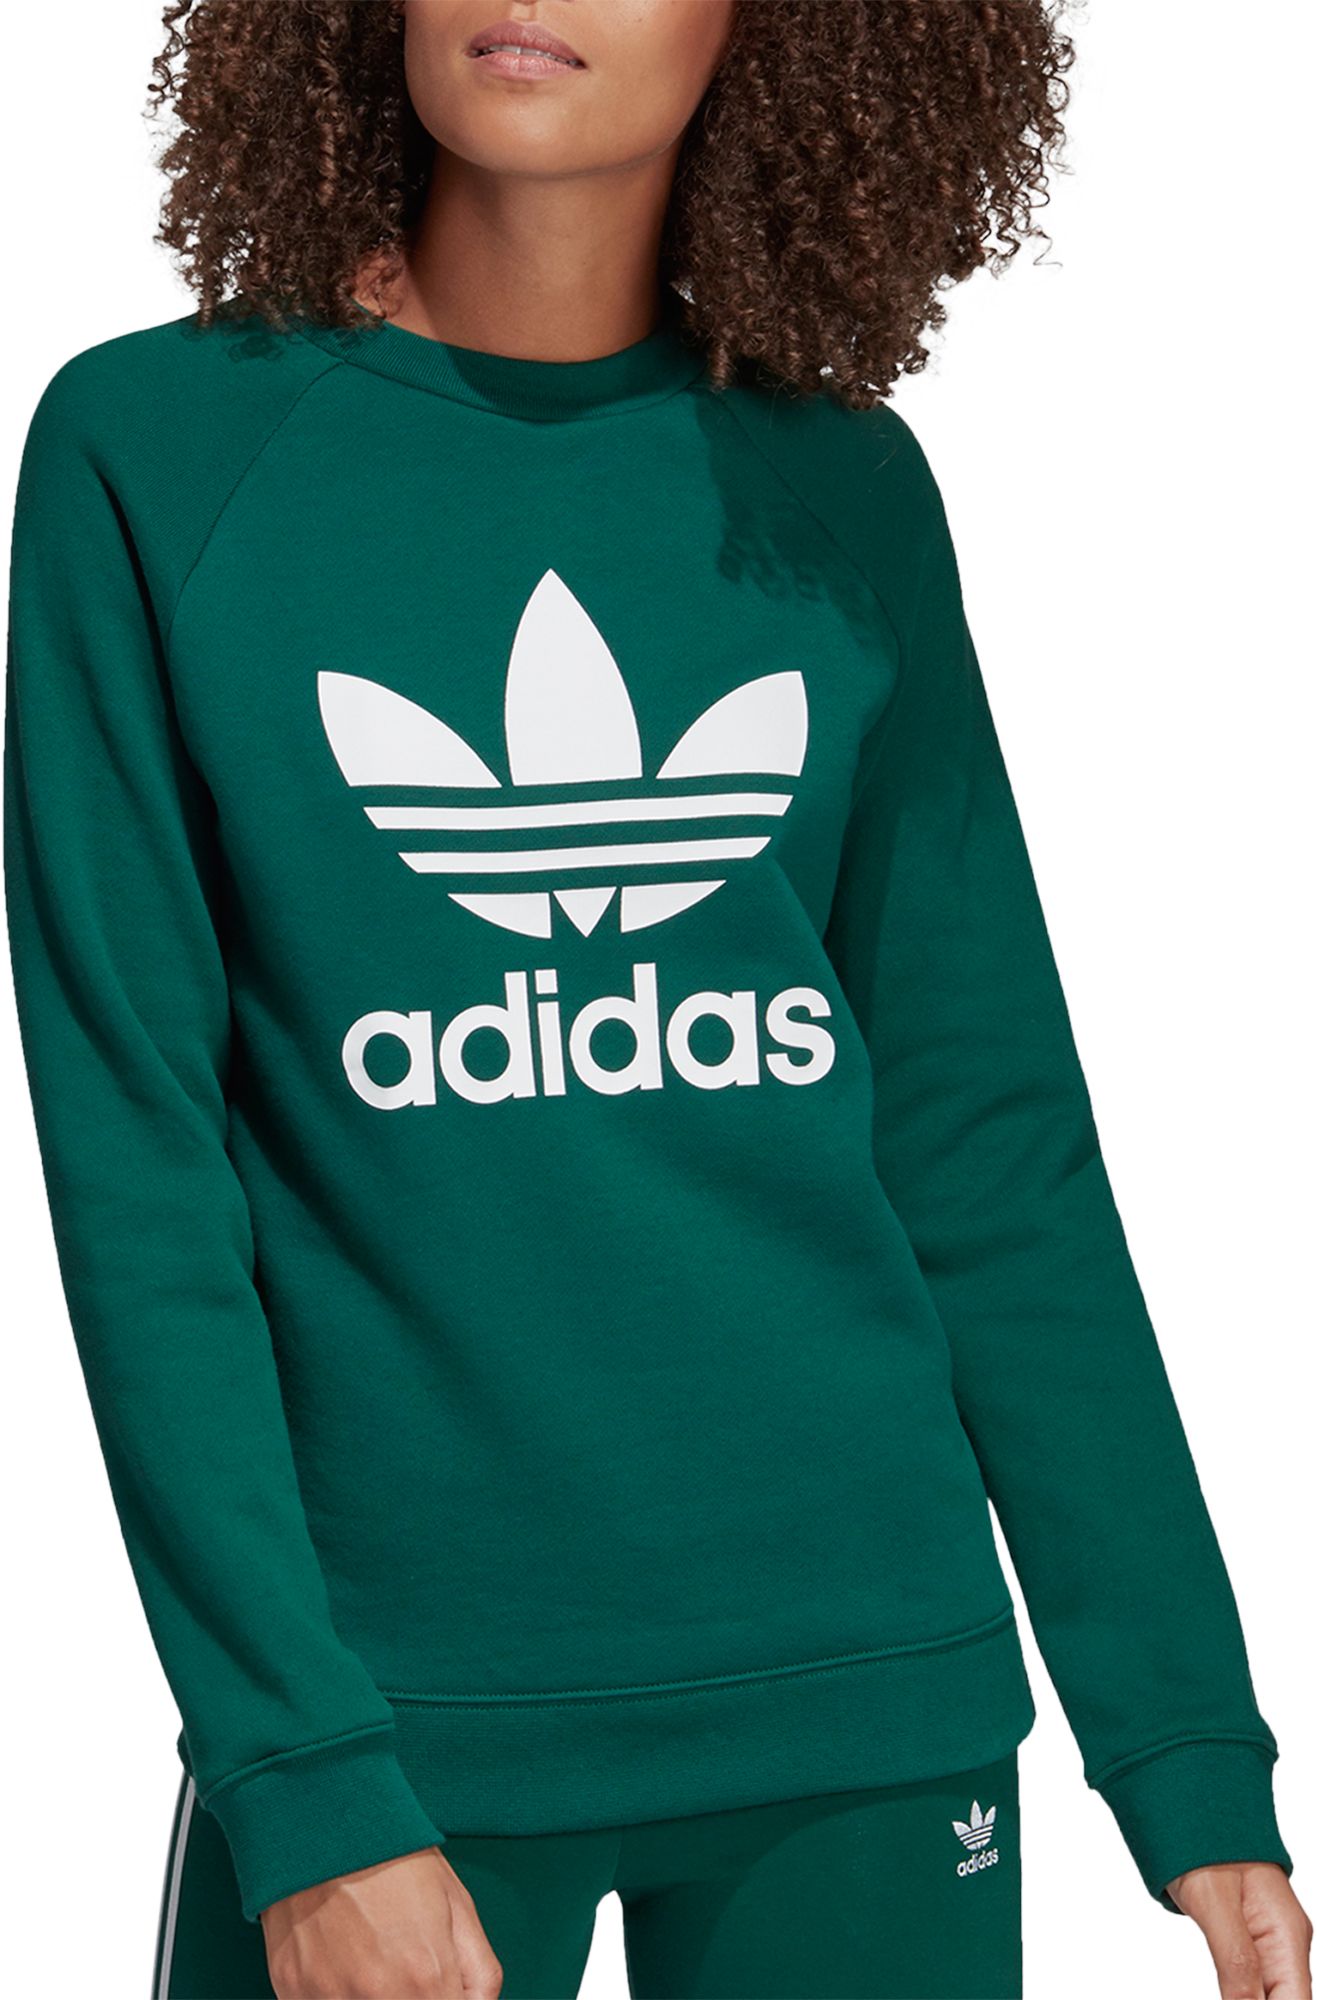 green adidas sweater